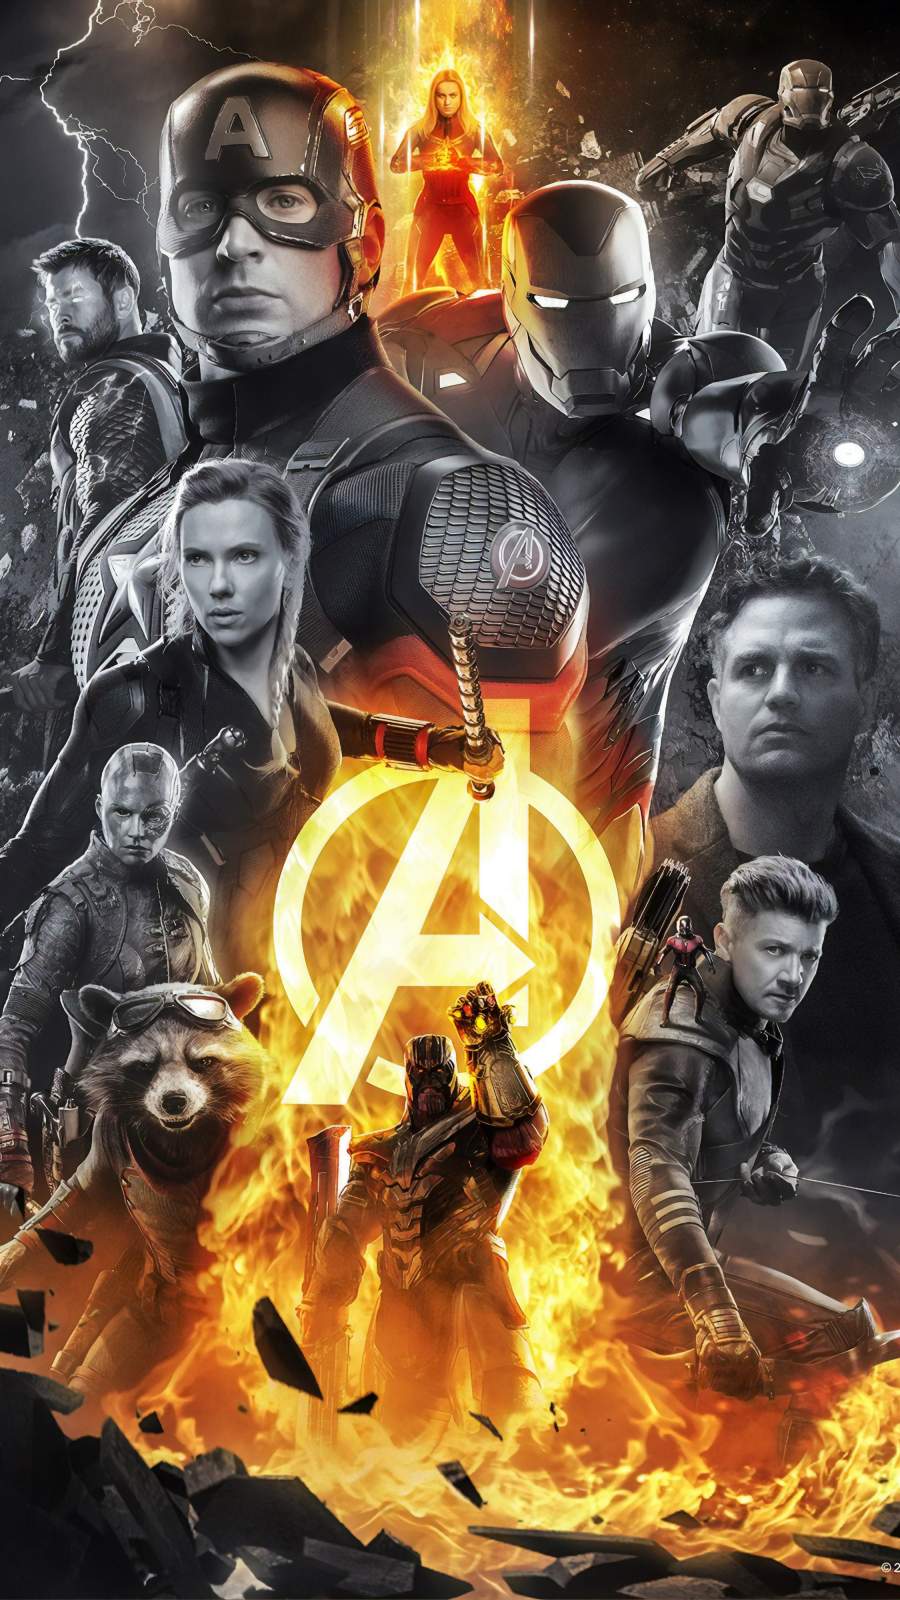 Avengers All Superheroes IPhone Wallpaper Wallpaper, iPhone Wallpaper